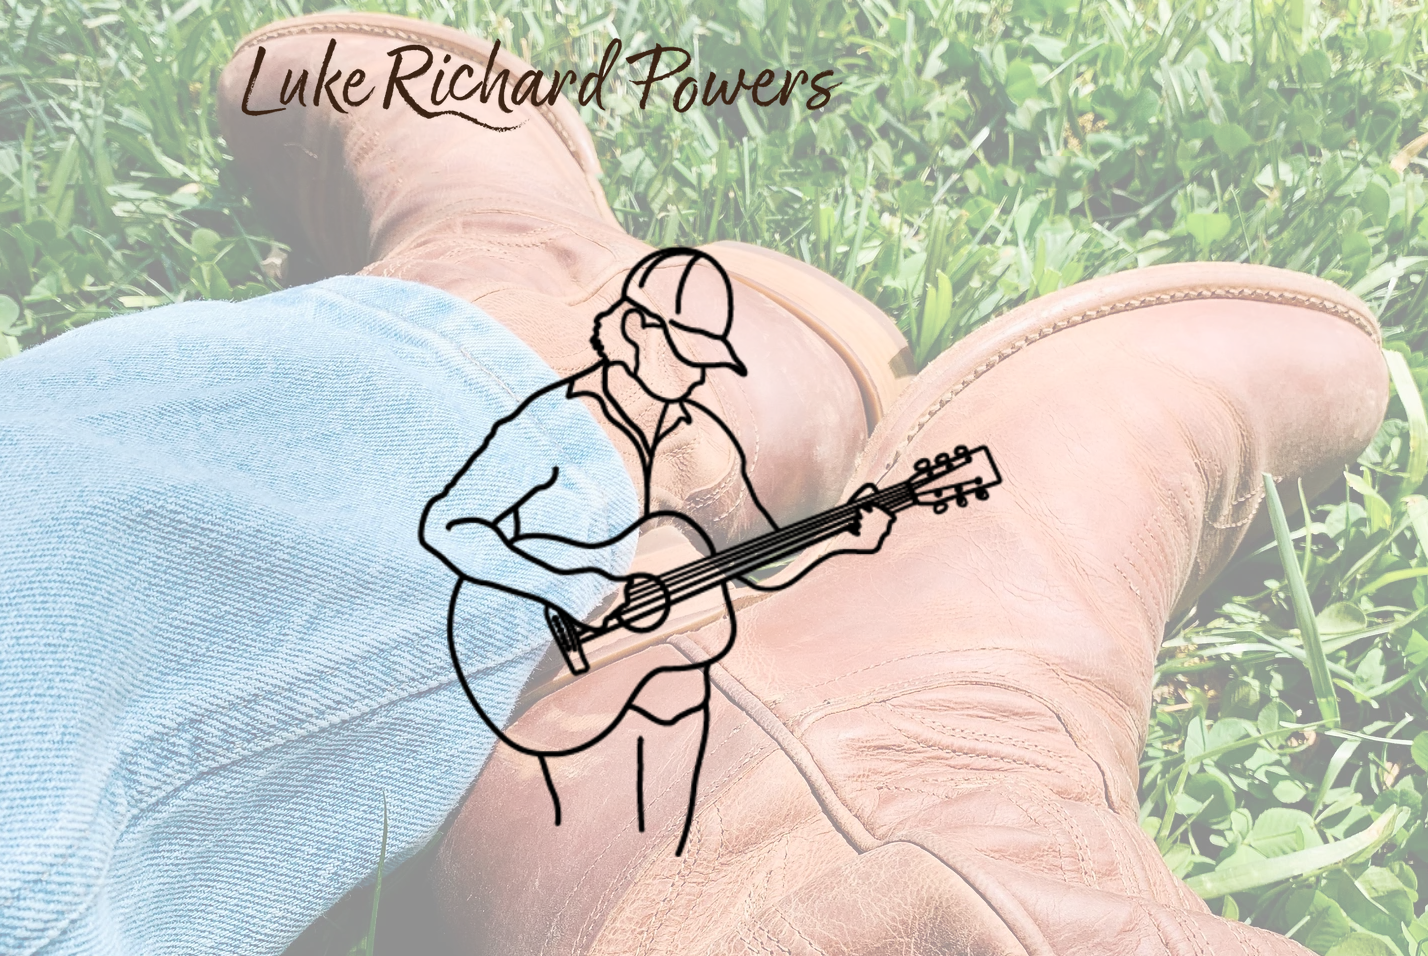 Check out Luke Richard Powers&apos; website!